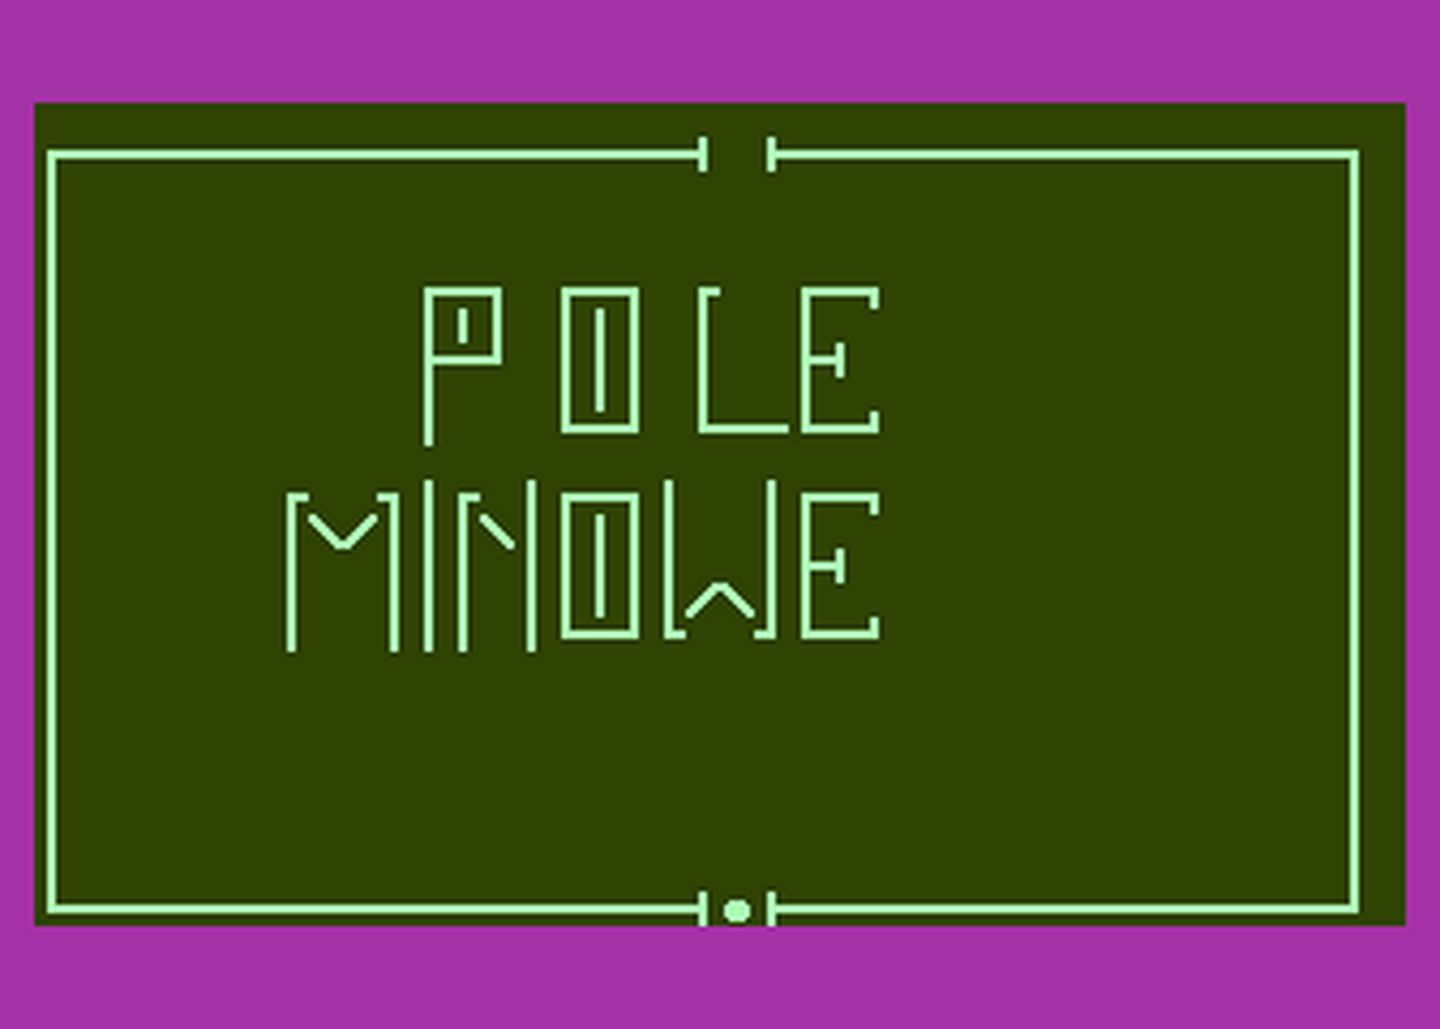 Atari GameBase Pole_Minowe (No_Publisher)